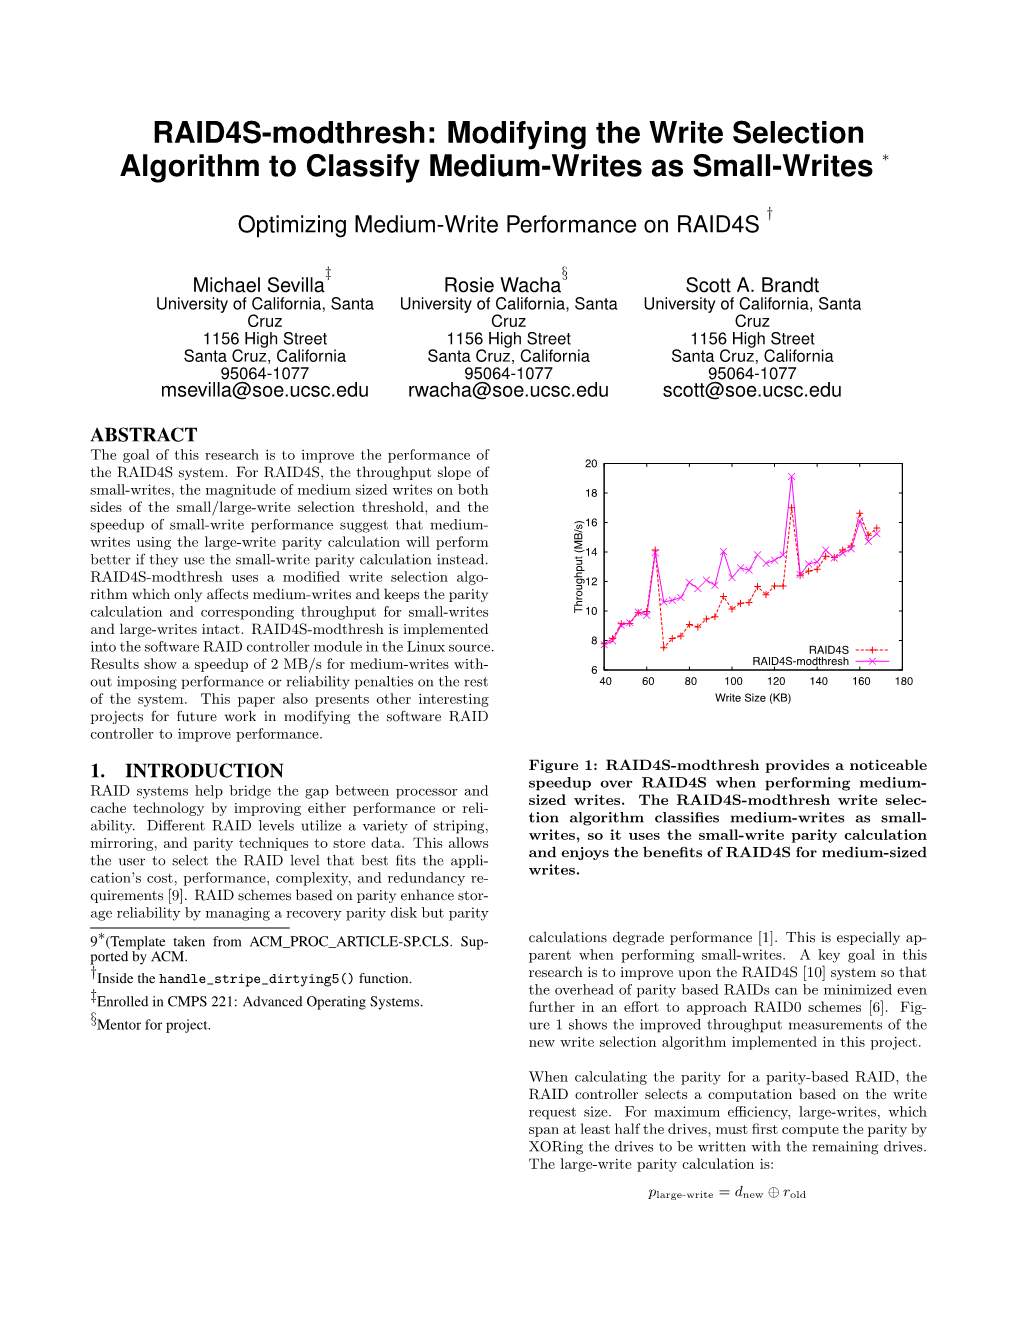 RAID4S-Modthresh: Modifying the Write Selection Algorithm to Classify Medium-Writes As Small-Writes ∗